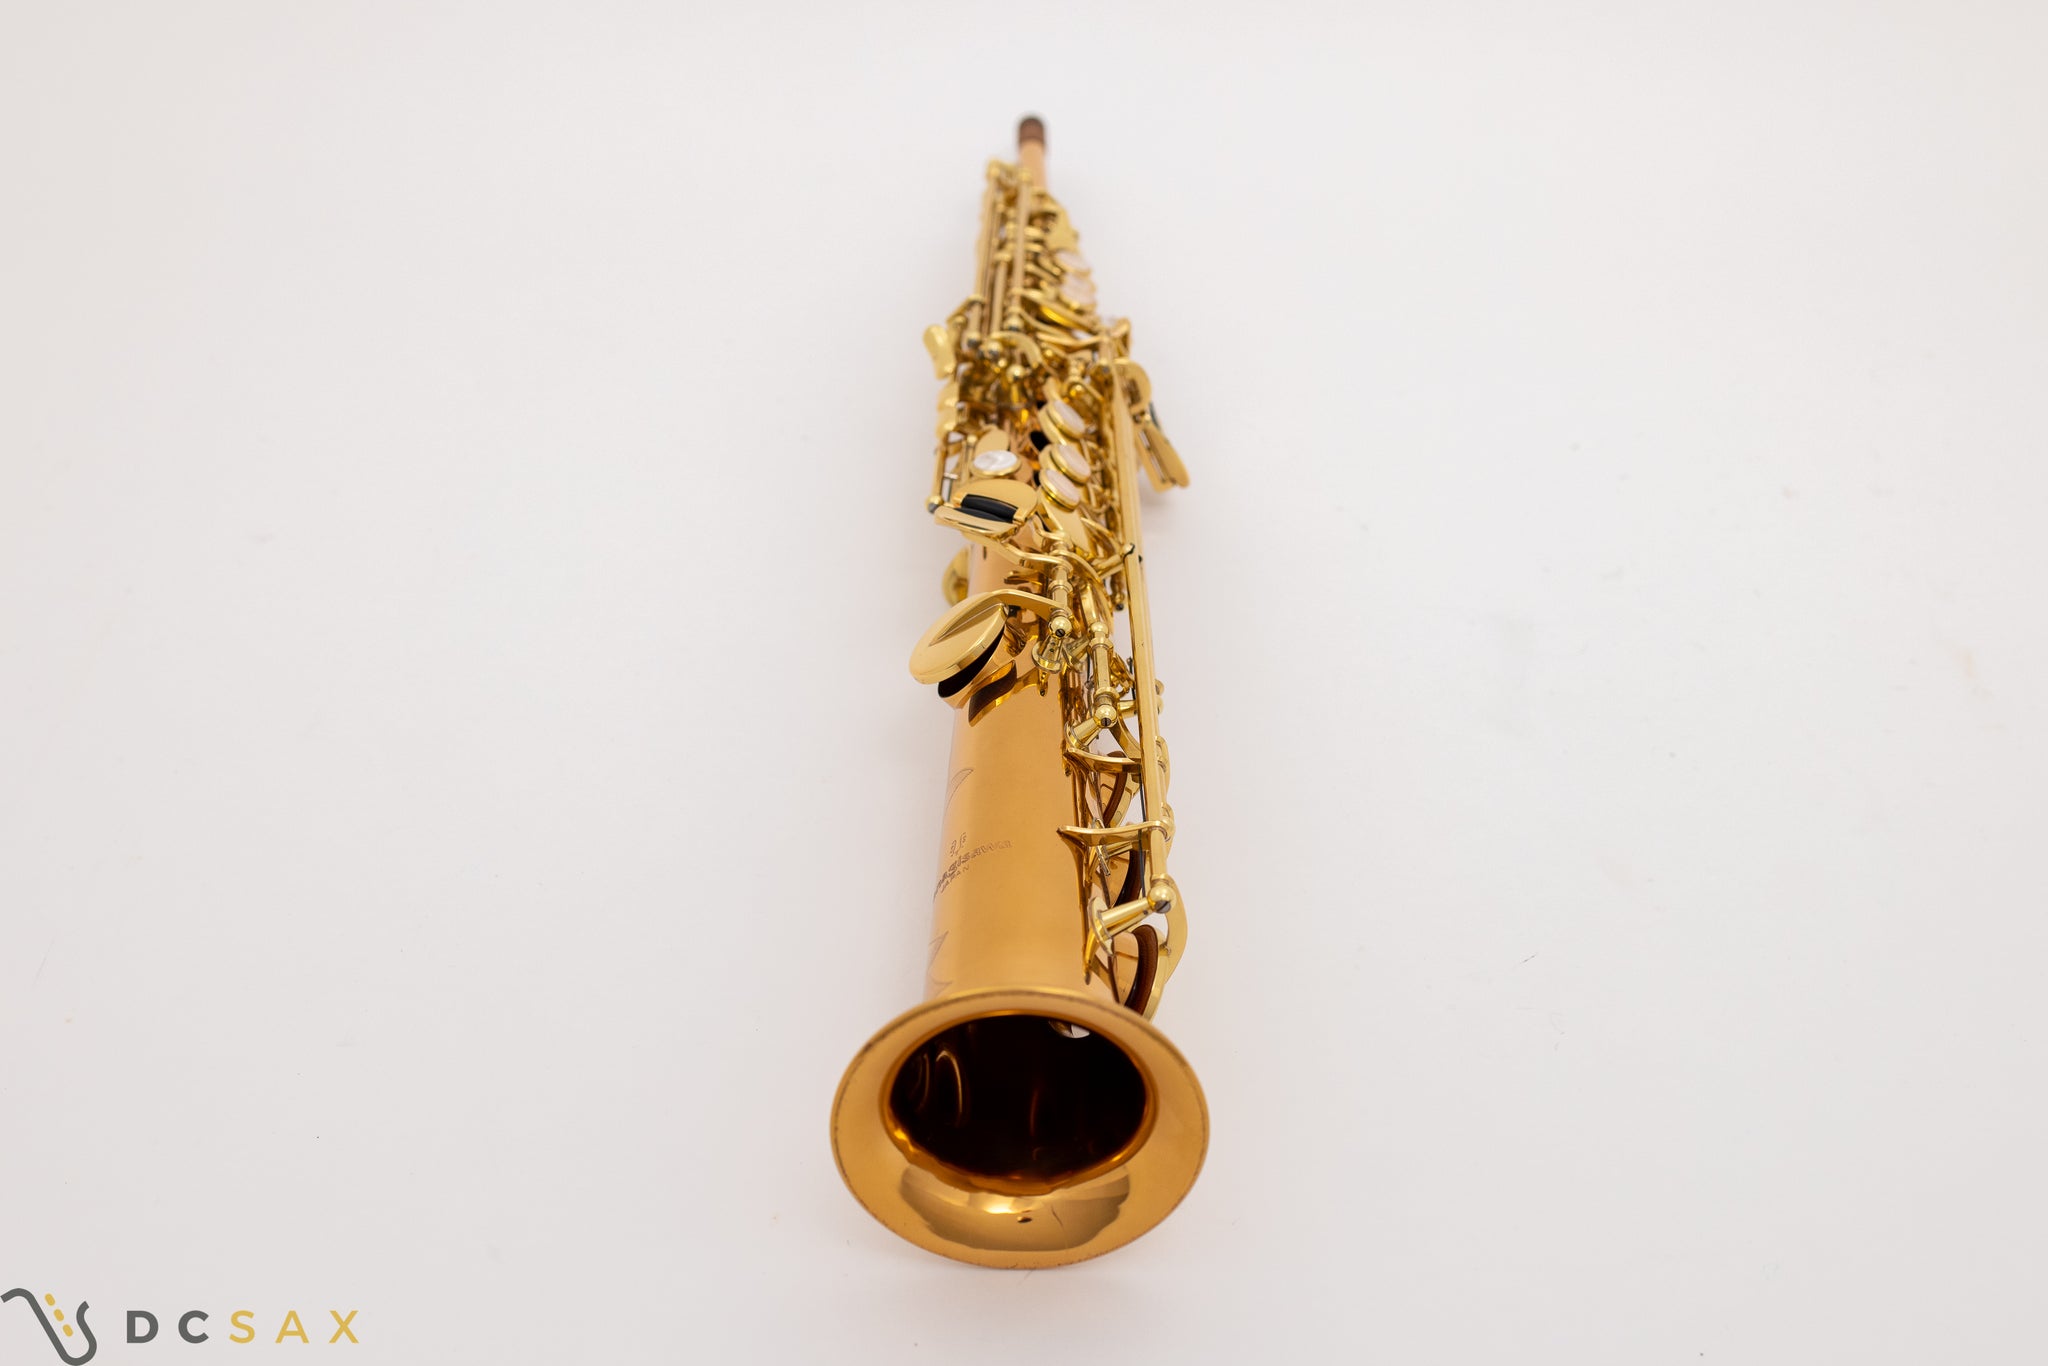 Yanagisawa S-902 Soprano Saxophone, Near Mint, Video